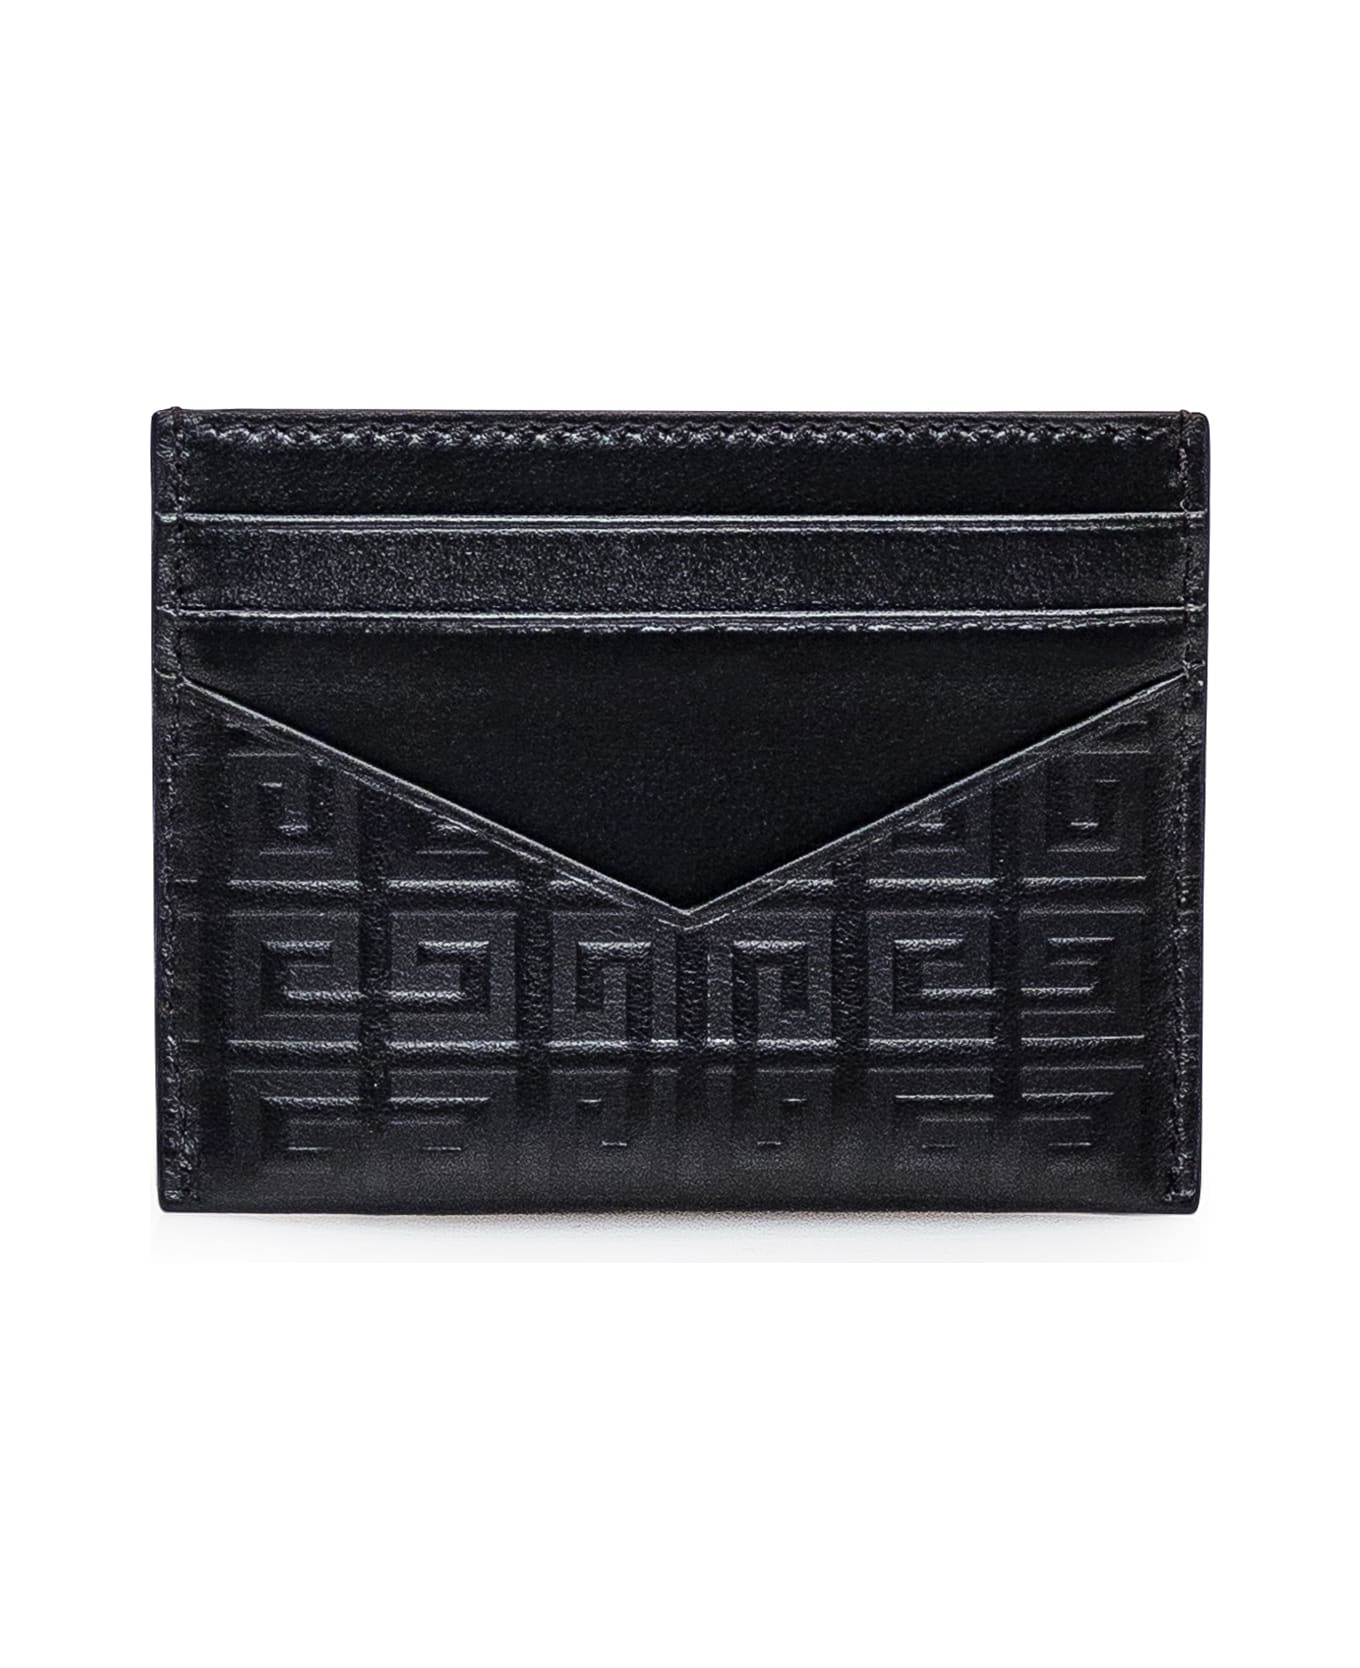 Givenchy Leather 4g Cardcase - Black